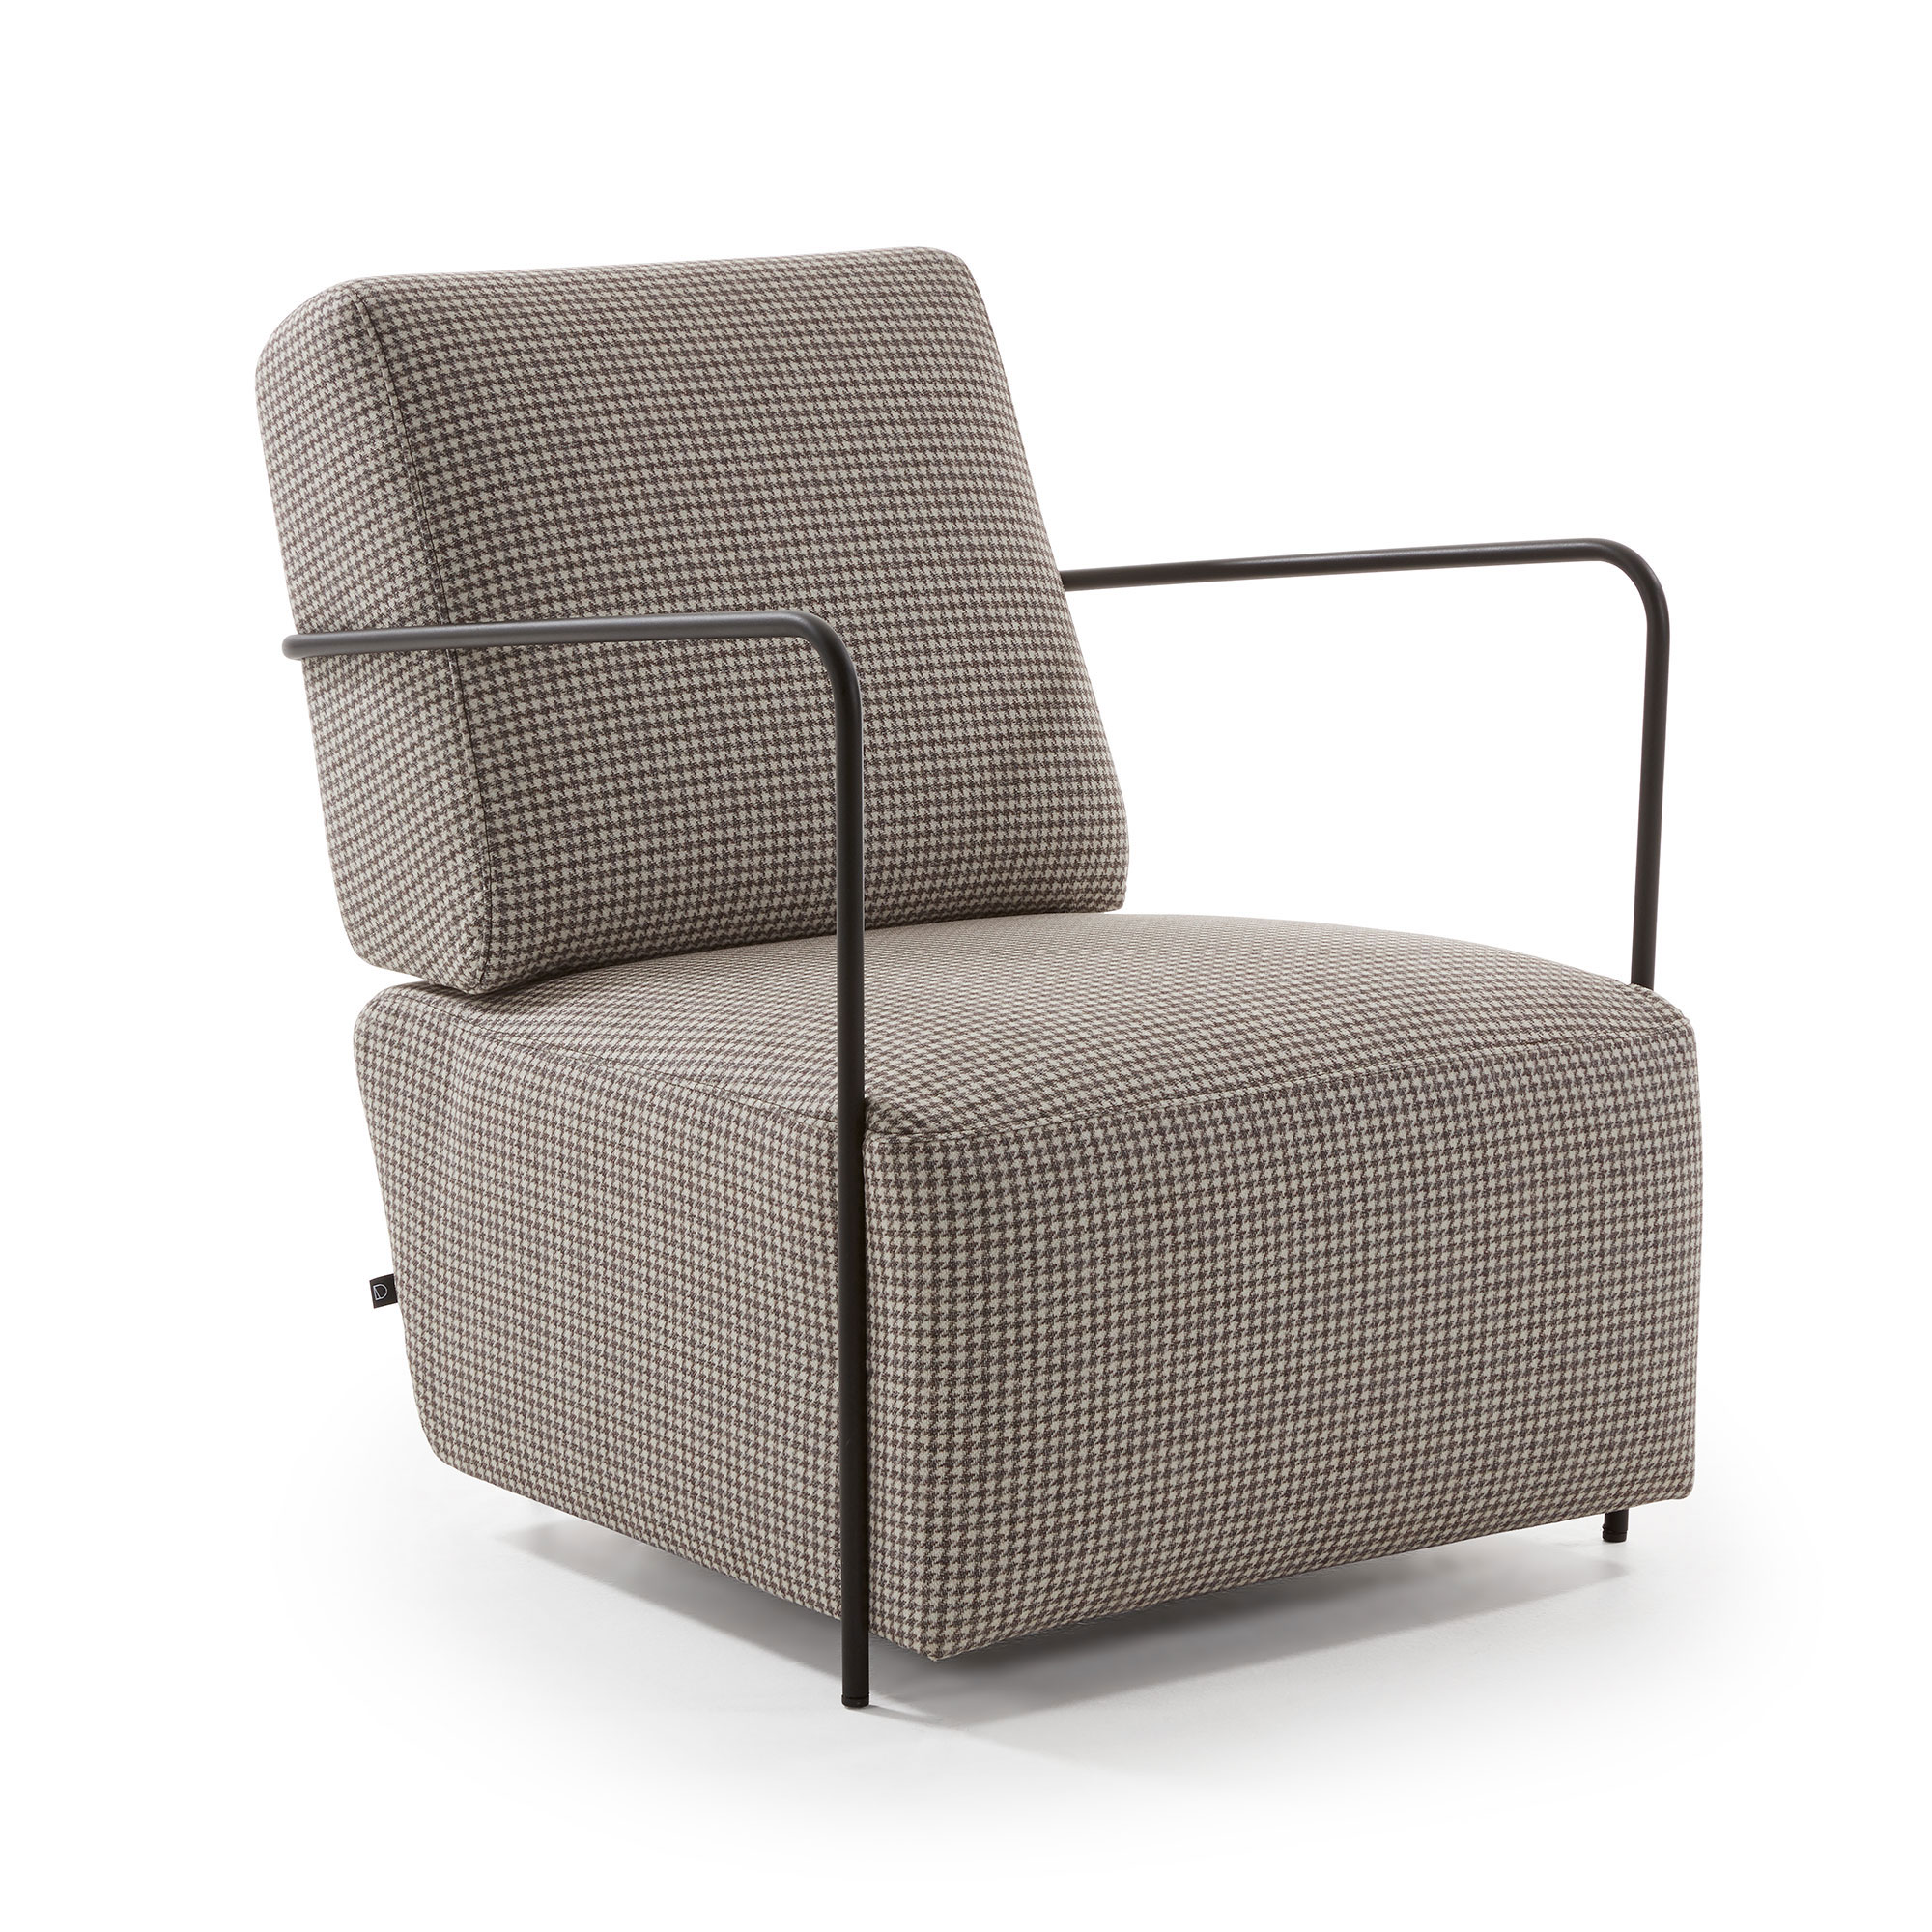 Chair Nirun Houndstooth Fabric W690 X H820 X D800mm